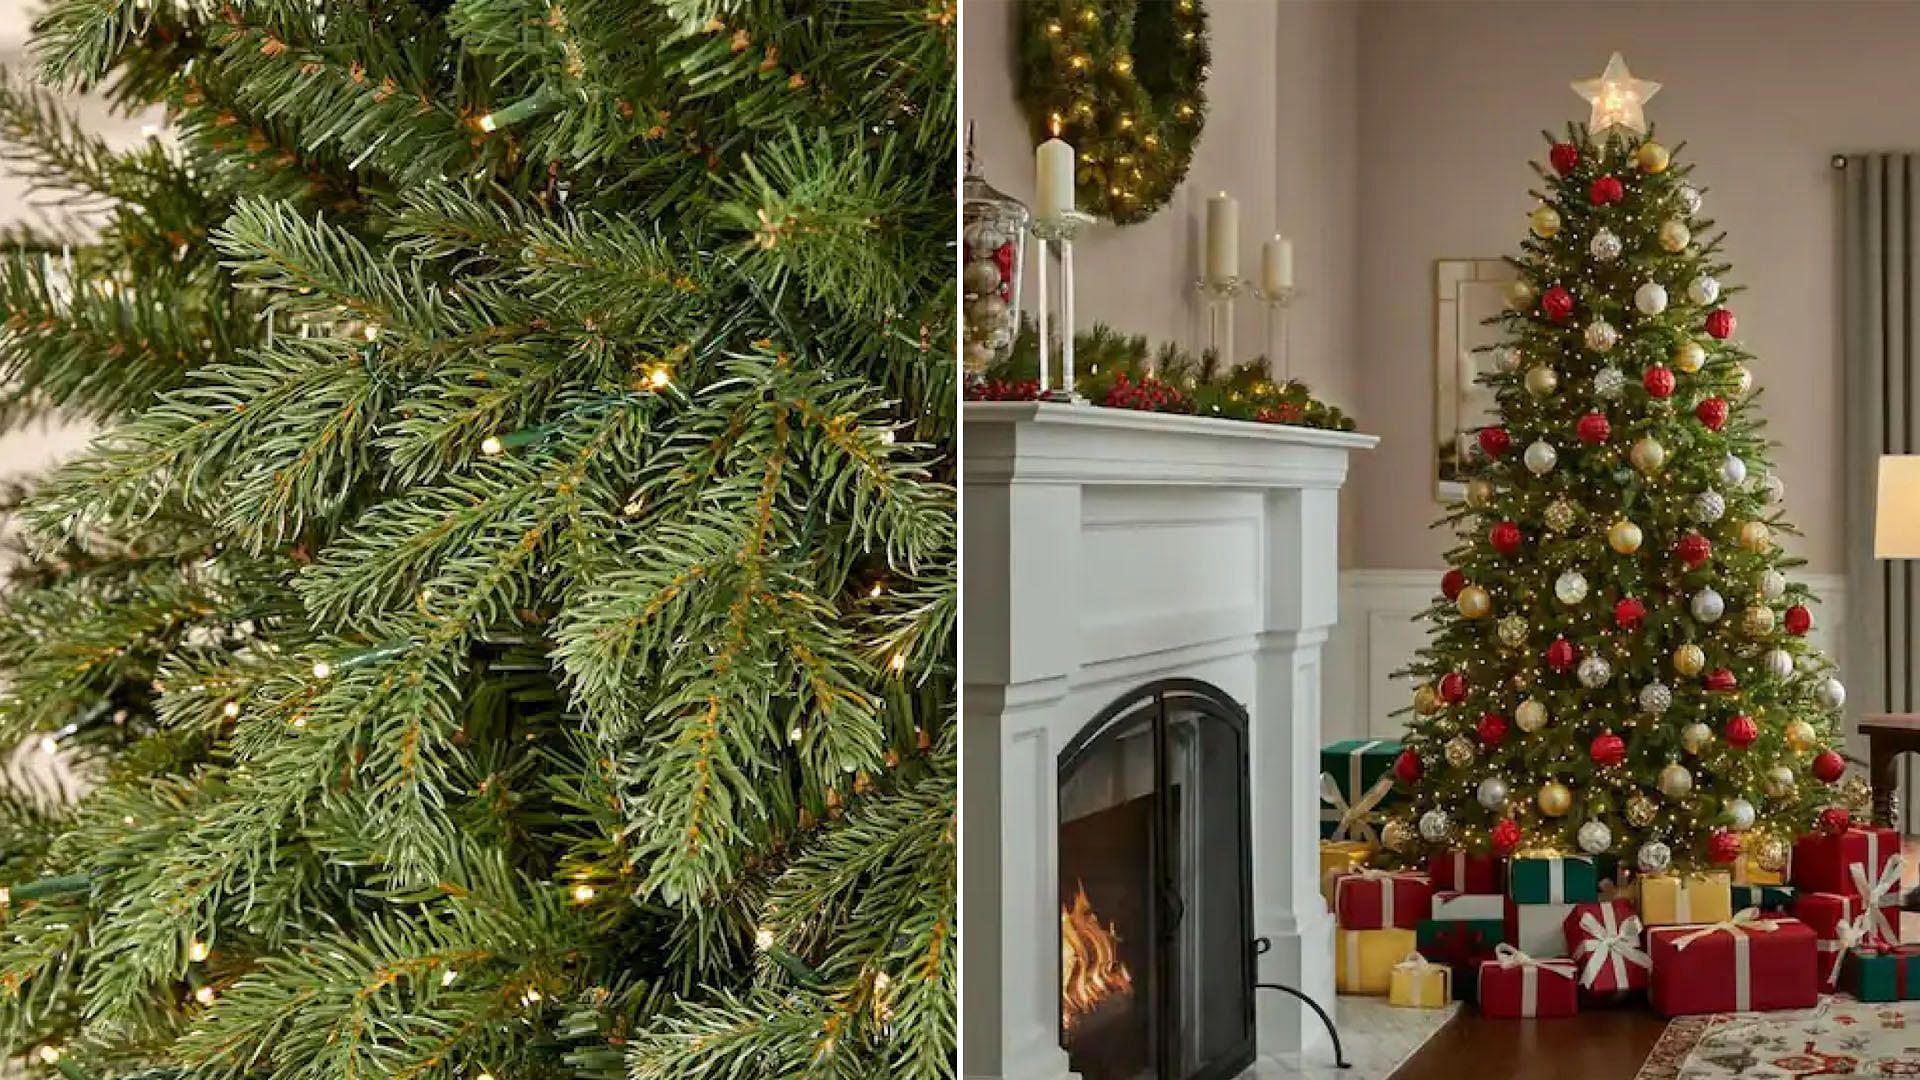 T27 Christmas tree has gone viral on TikTok (image via The Home Depot)